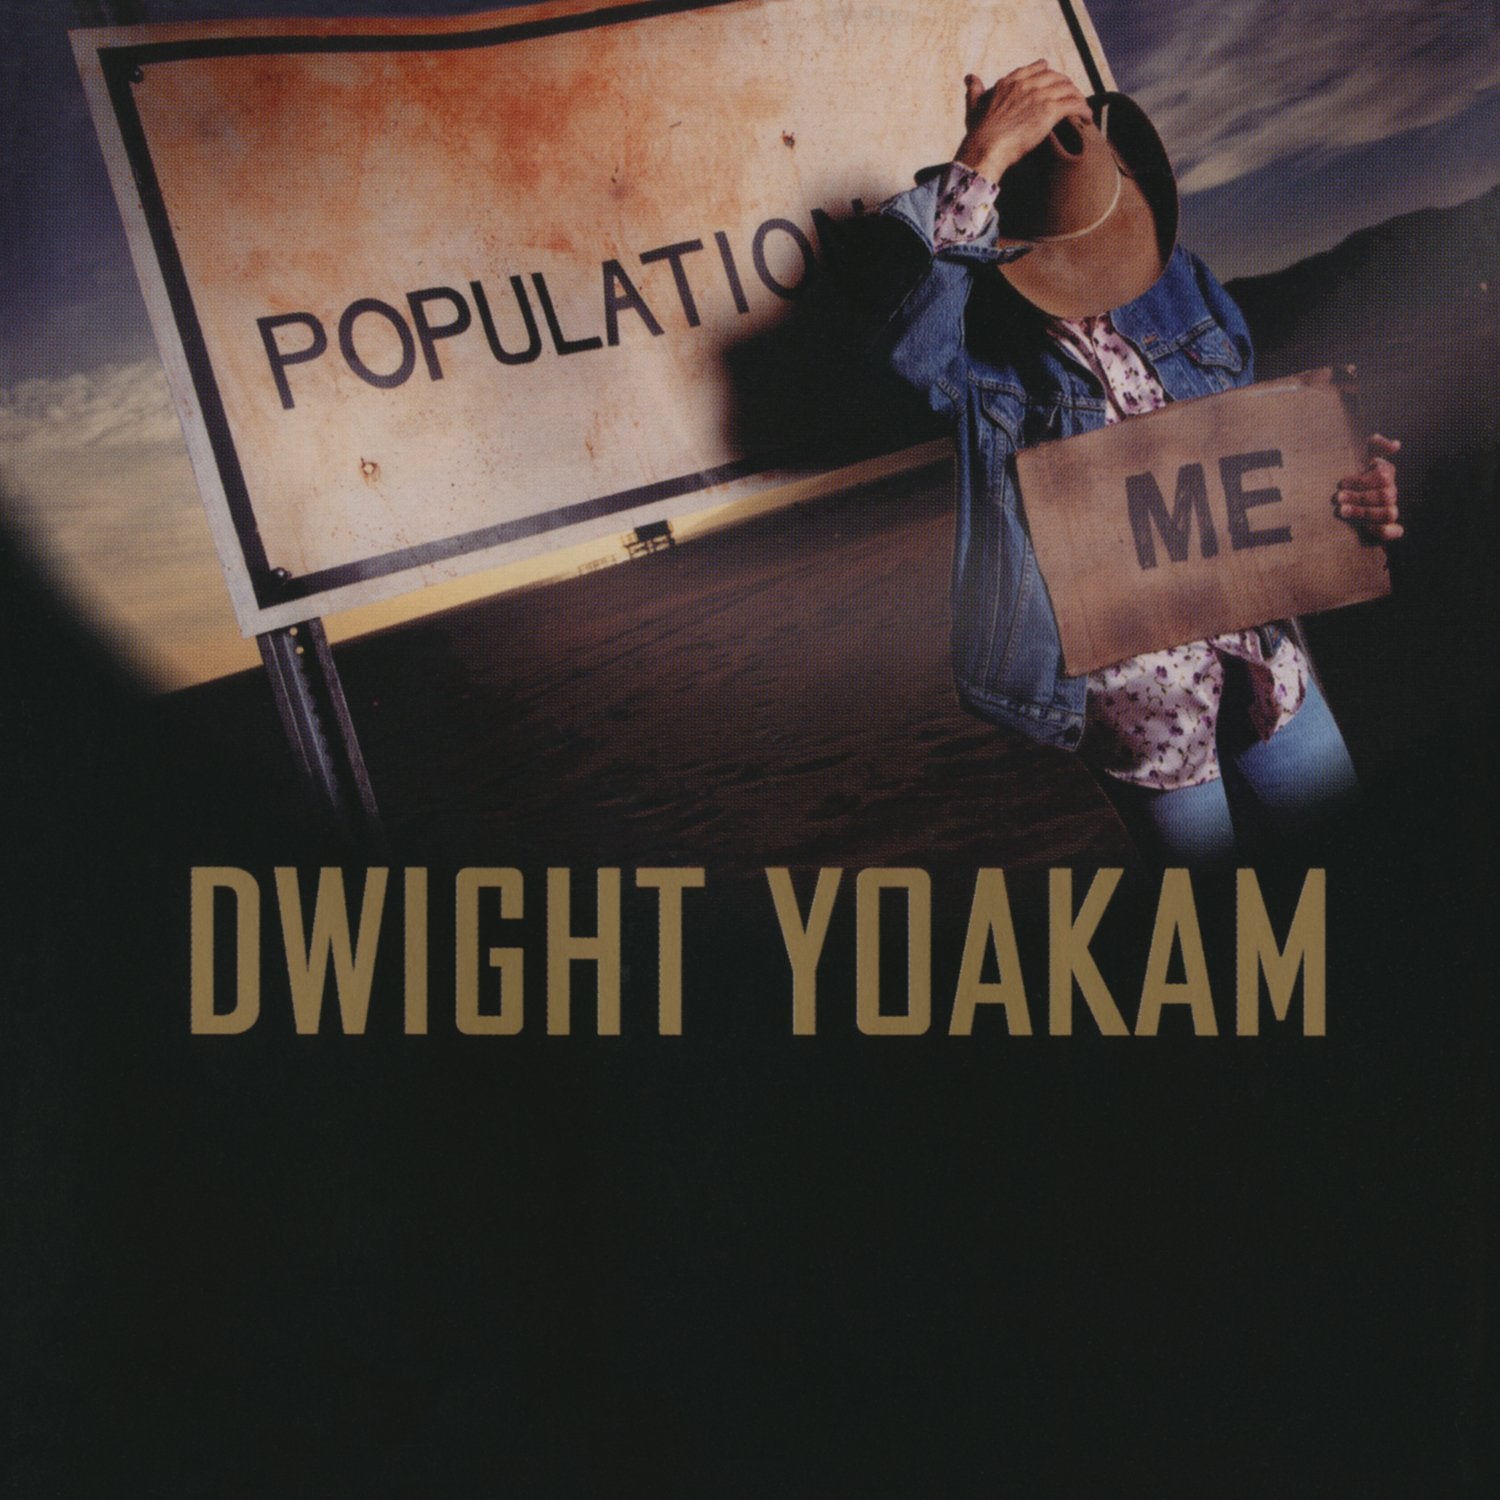 DWIGHT YOAKAM – Population Me – LP - Ocean Blue Colored Vinyl